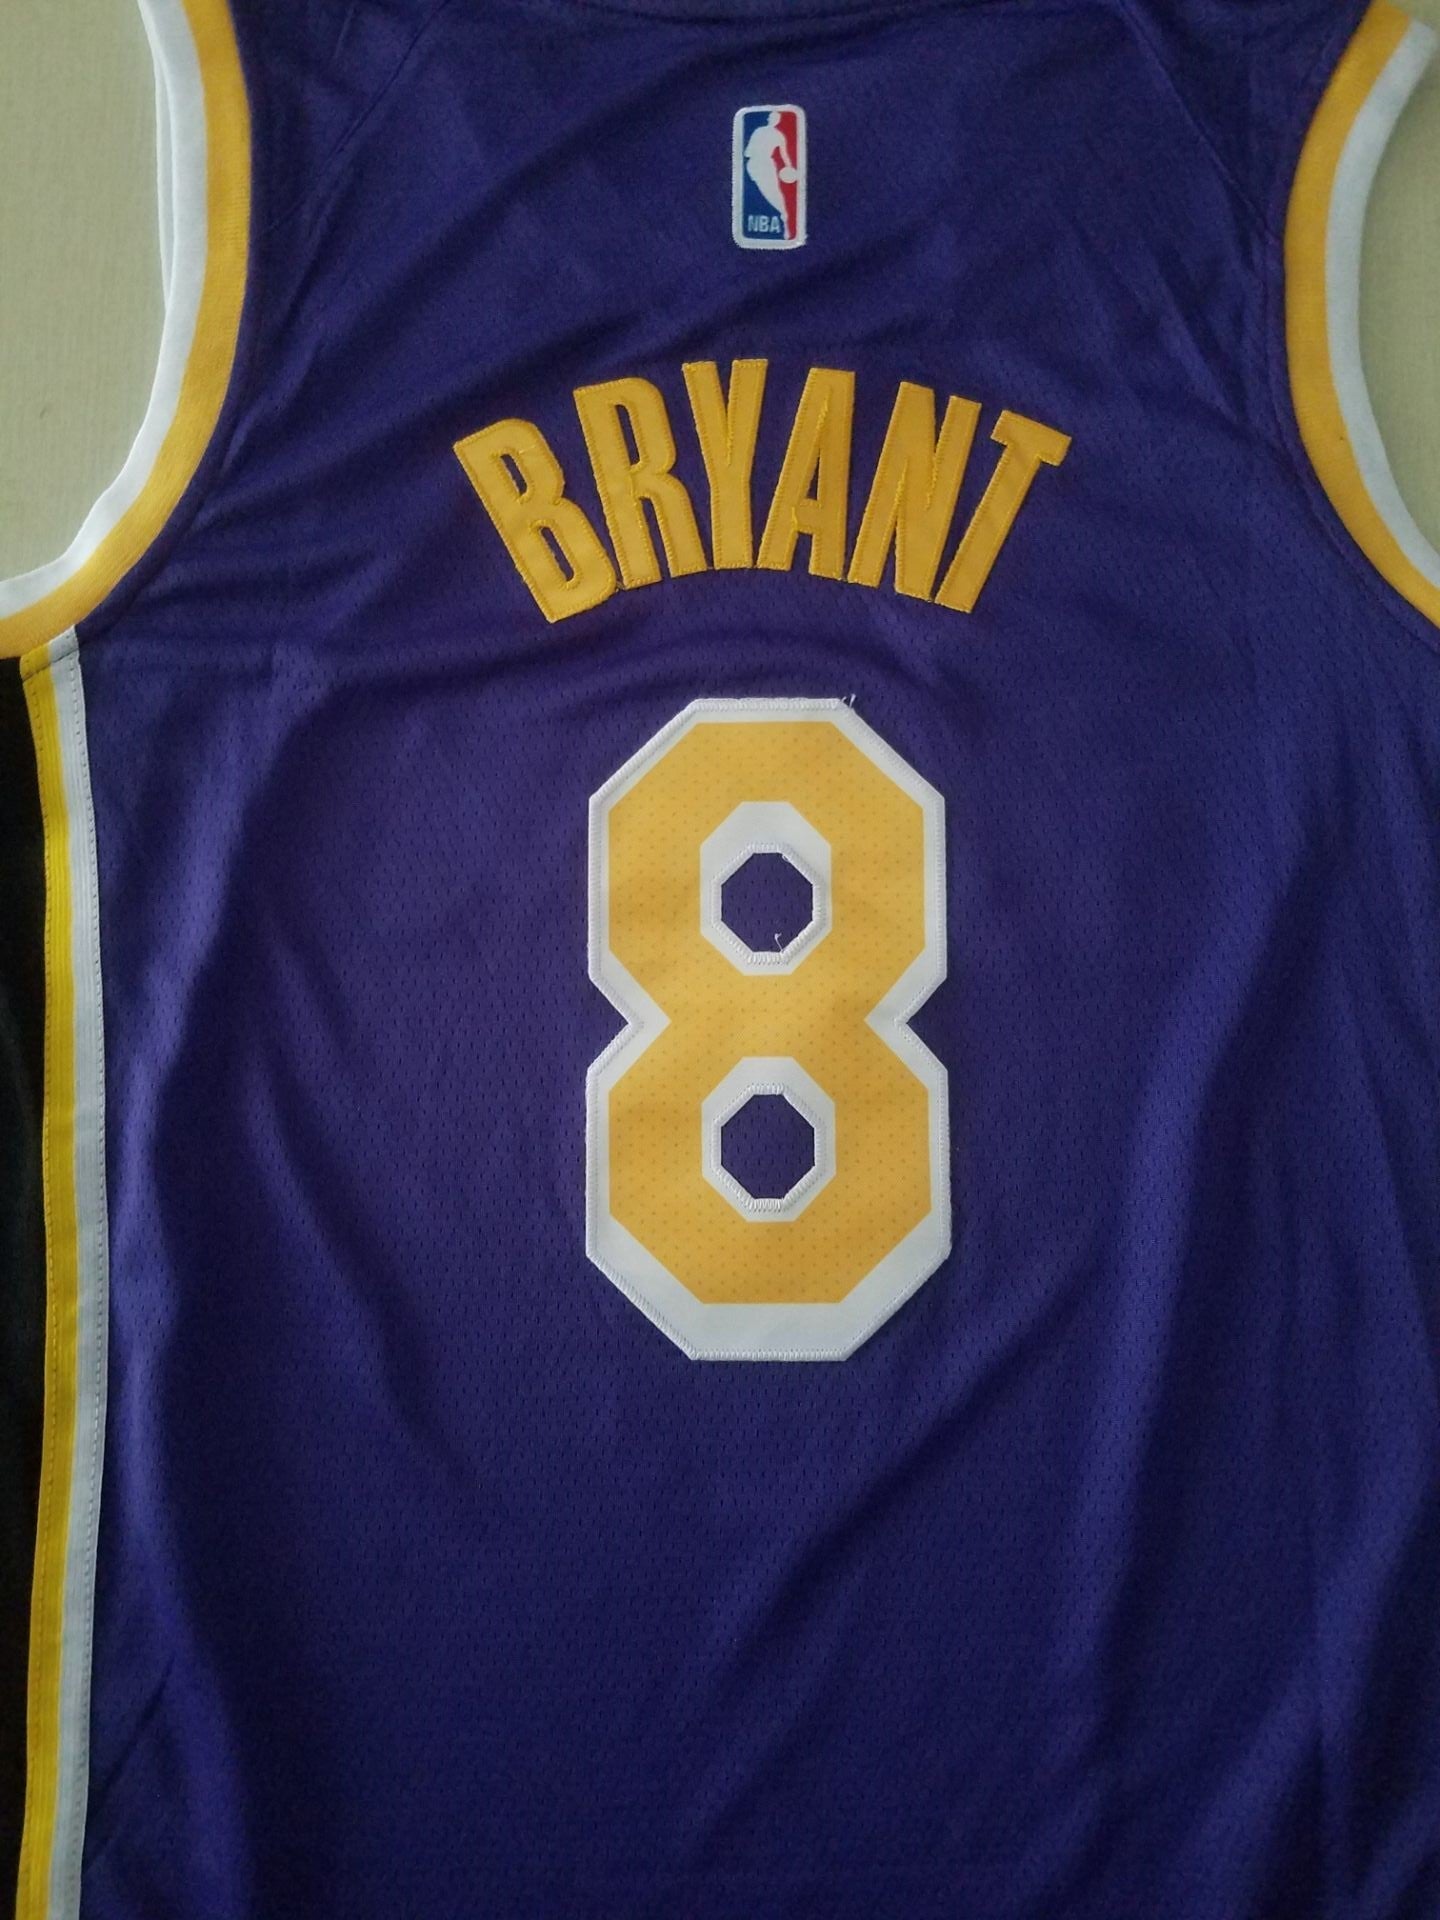 Men's Los Angeles Lakers Kobe Bryant #8 Purple Swingman Player Jersey